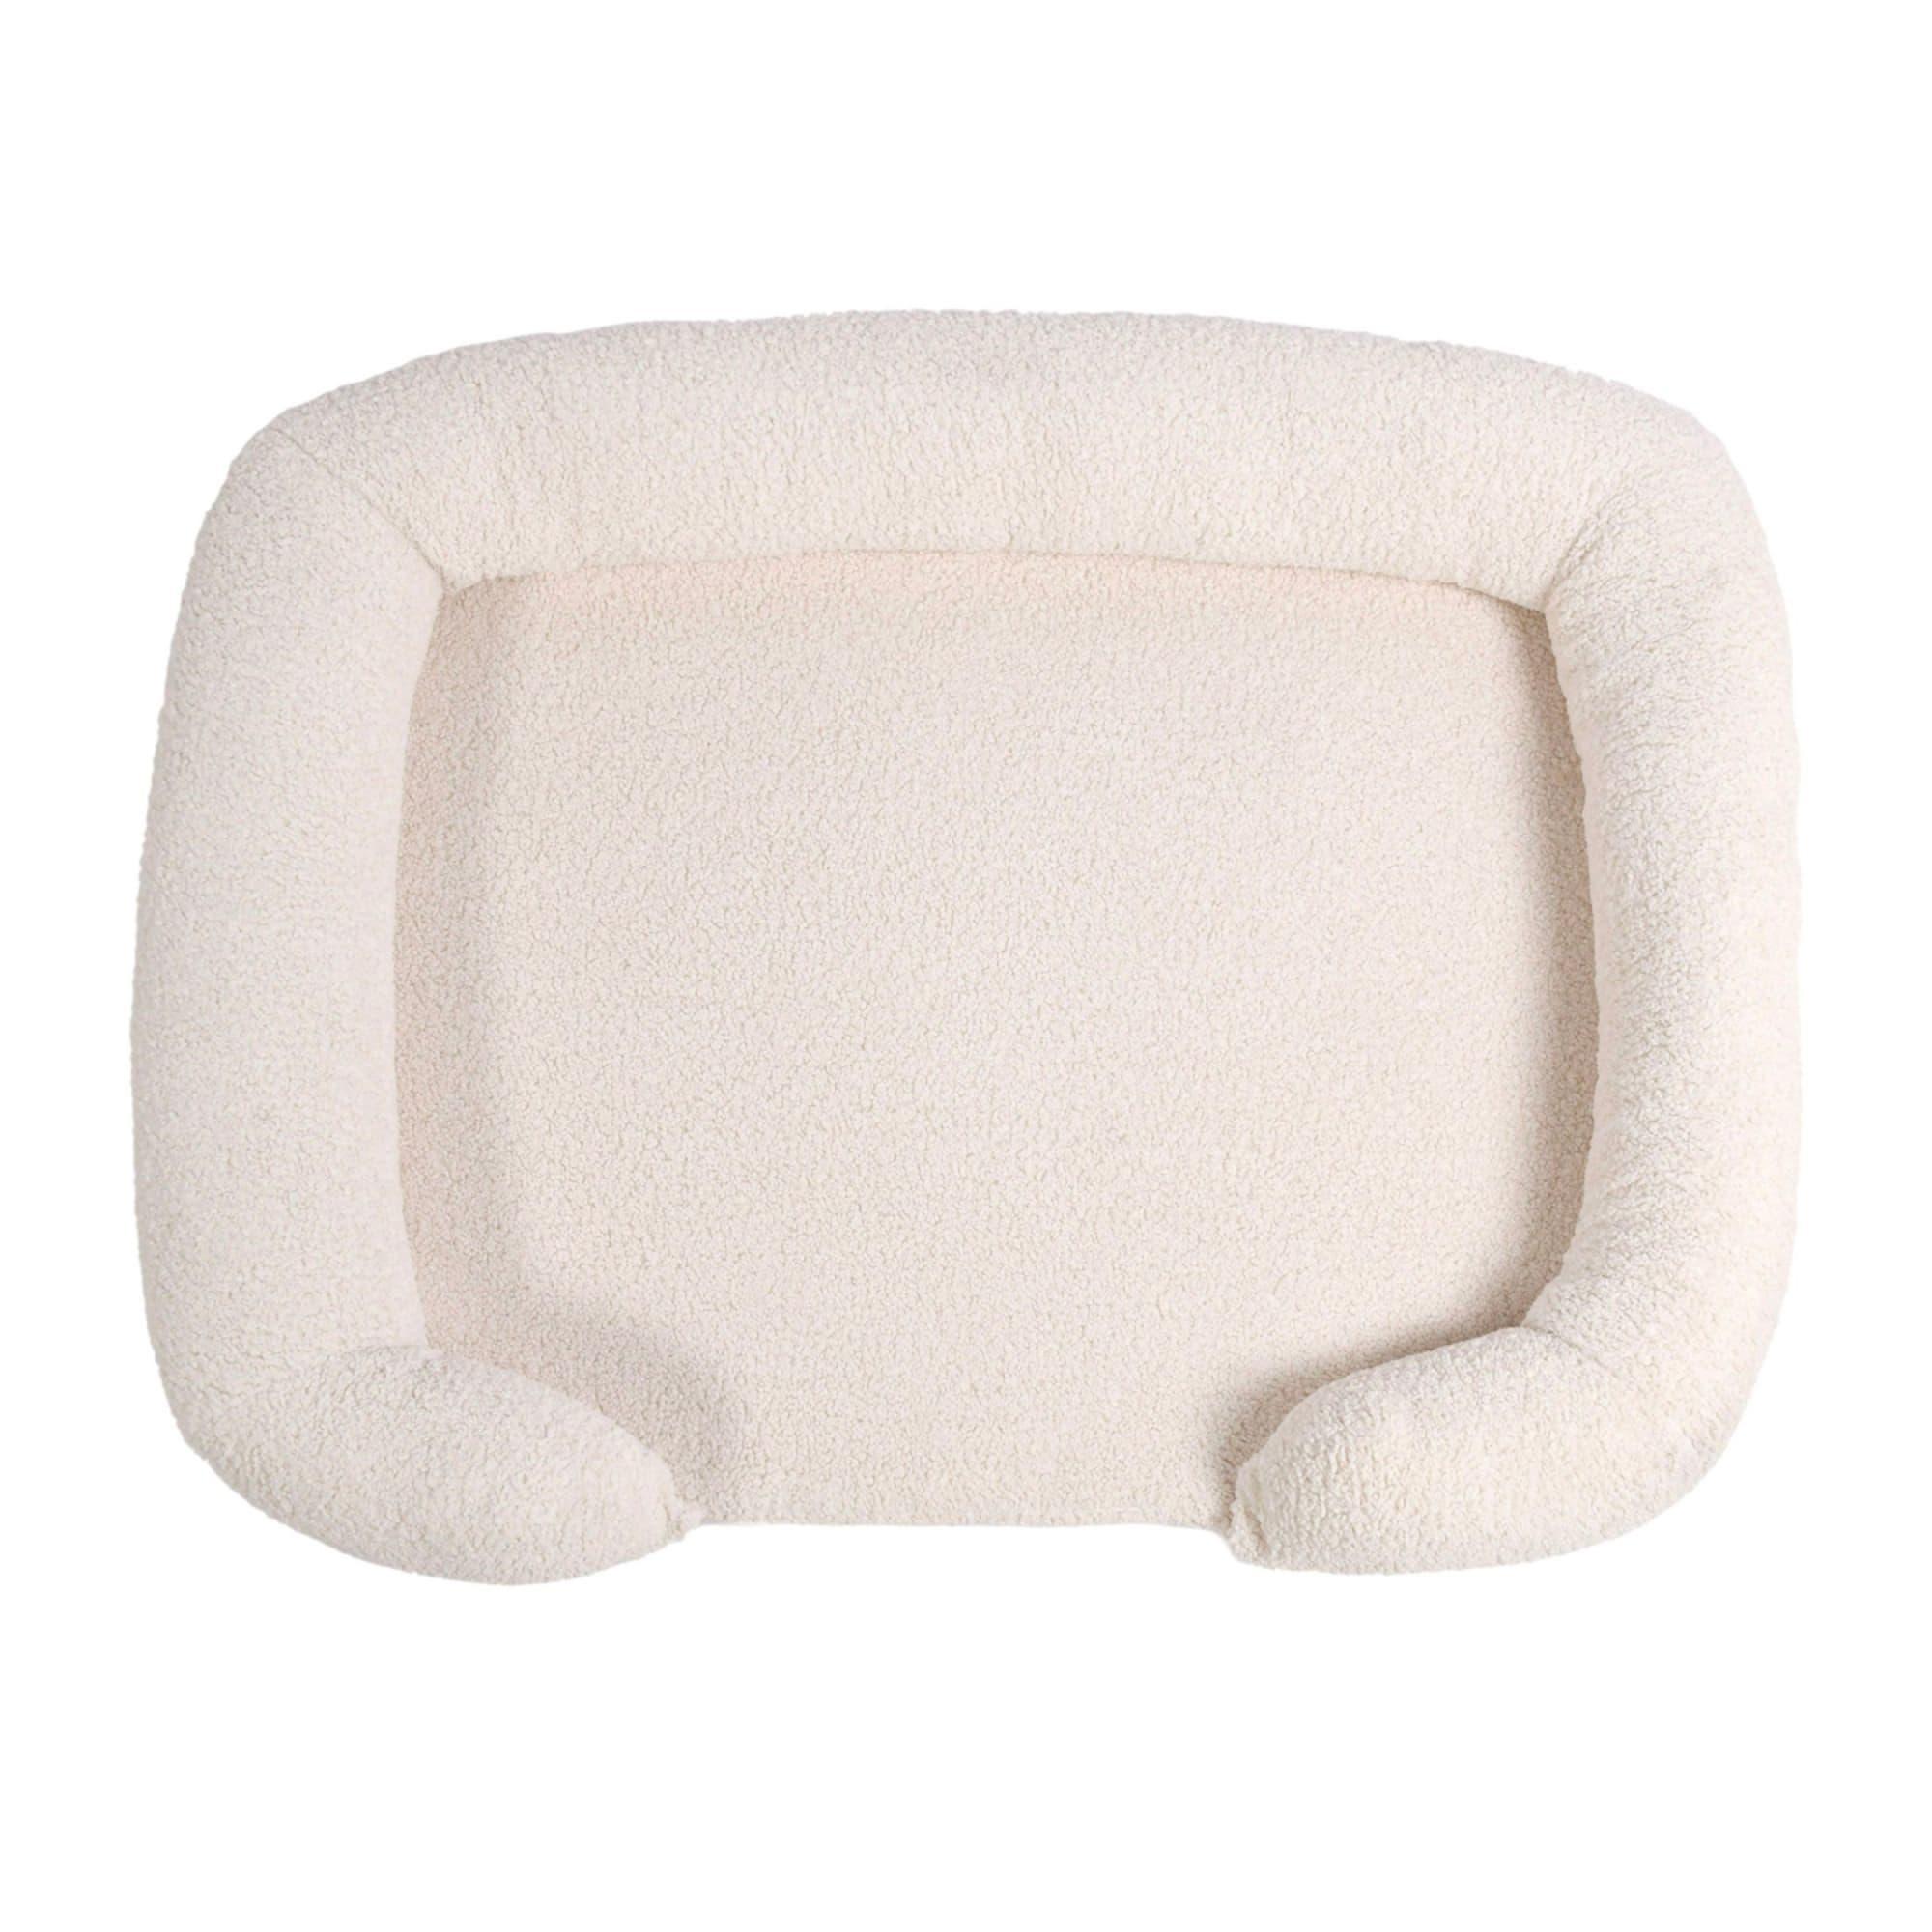 Charlie's Teddy Fleece Orthopedic Memory Foam Sofa Dog Bed Large Cream Image 4